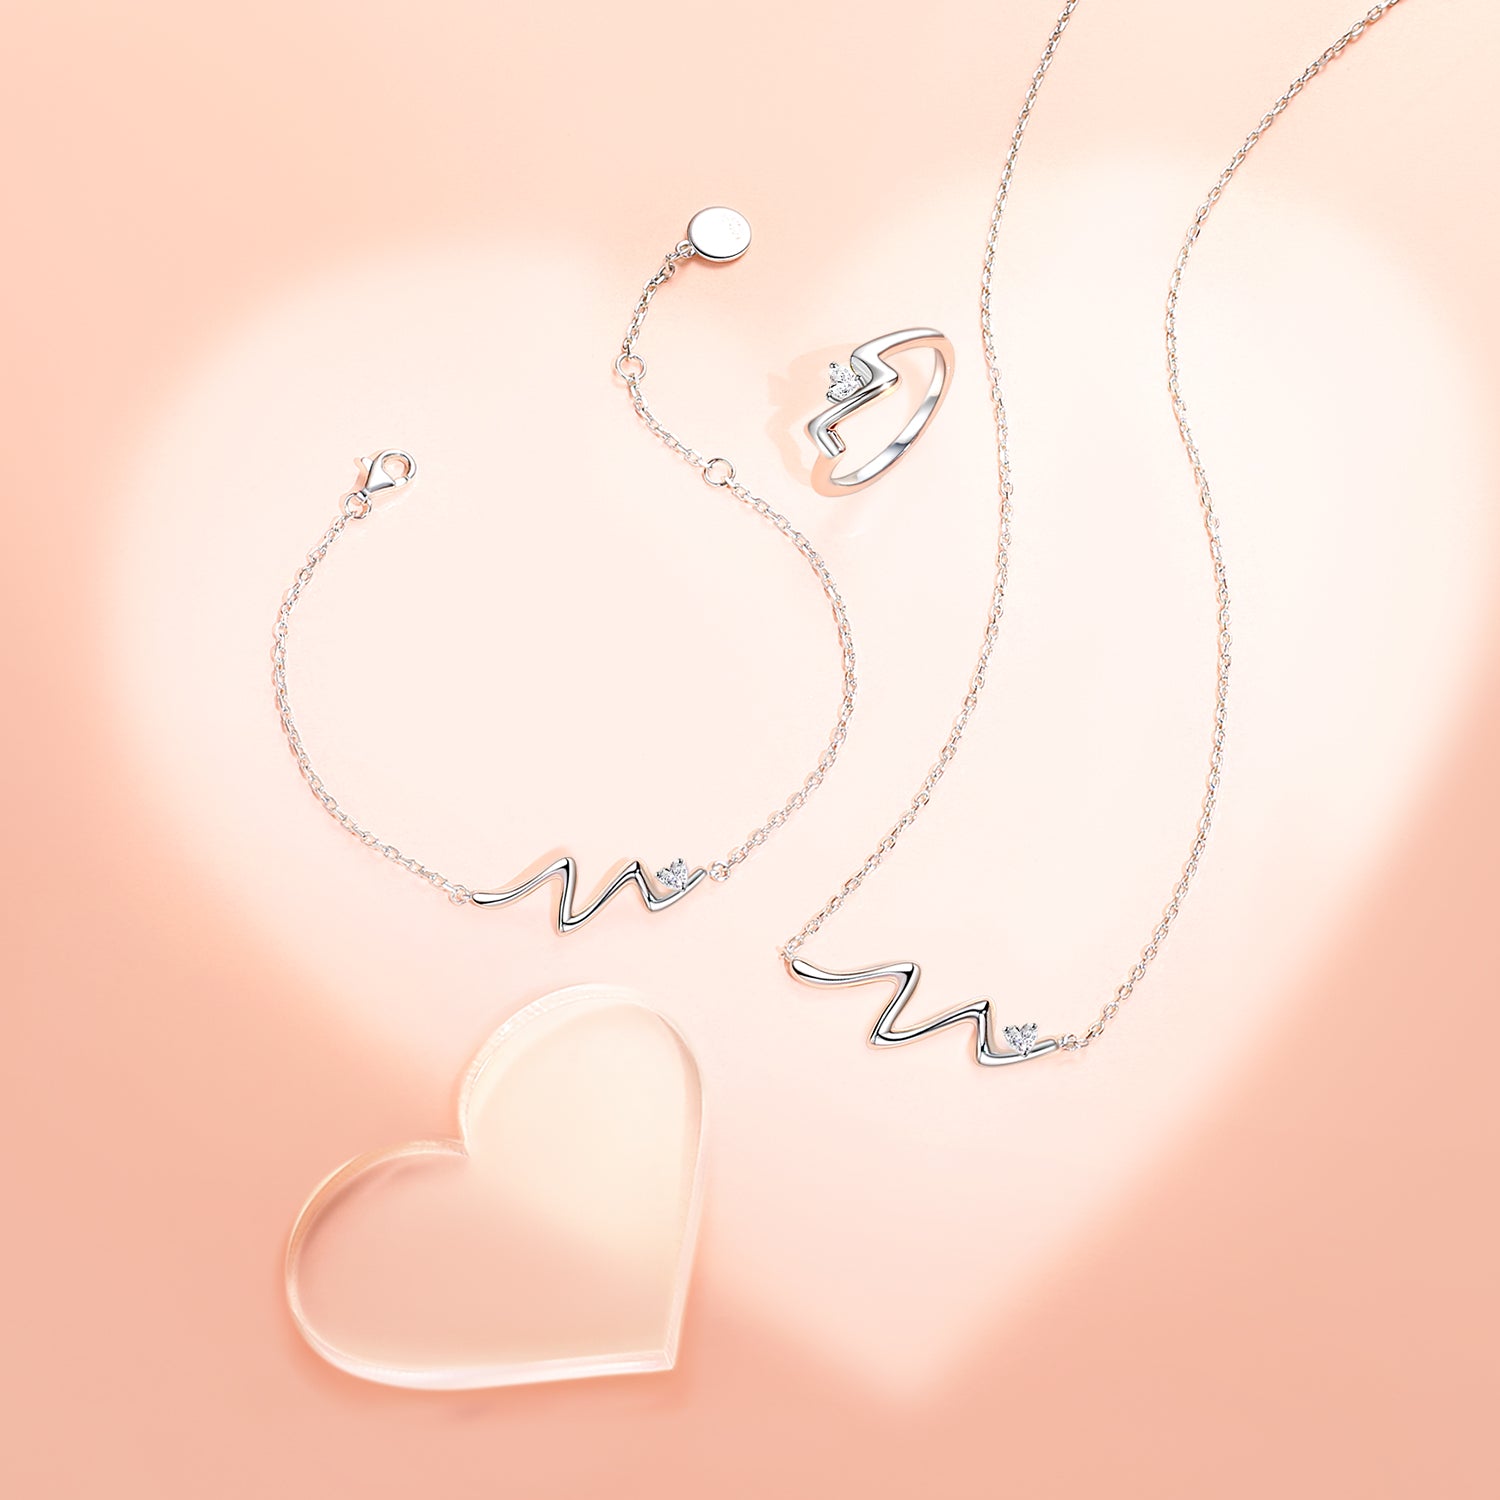 FANCIME “Dazzling Wink” Heart Wave Sterling Silver Necklace Set